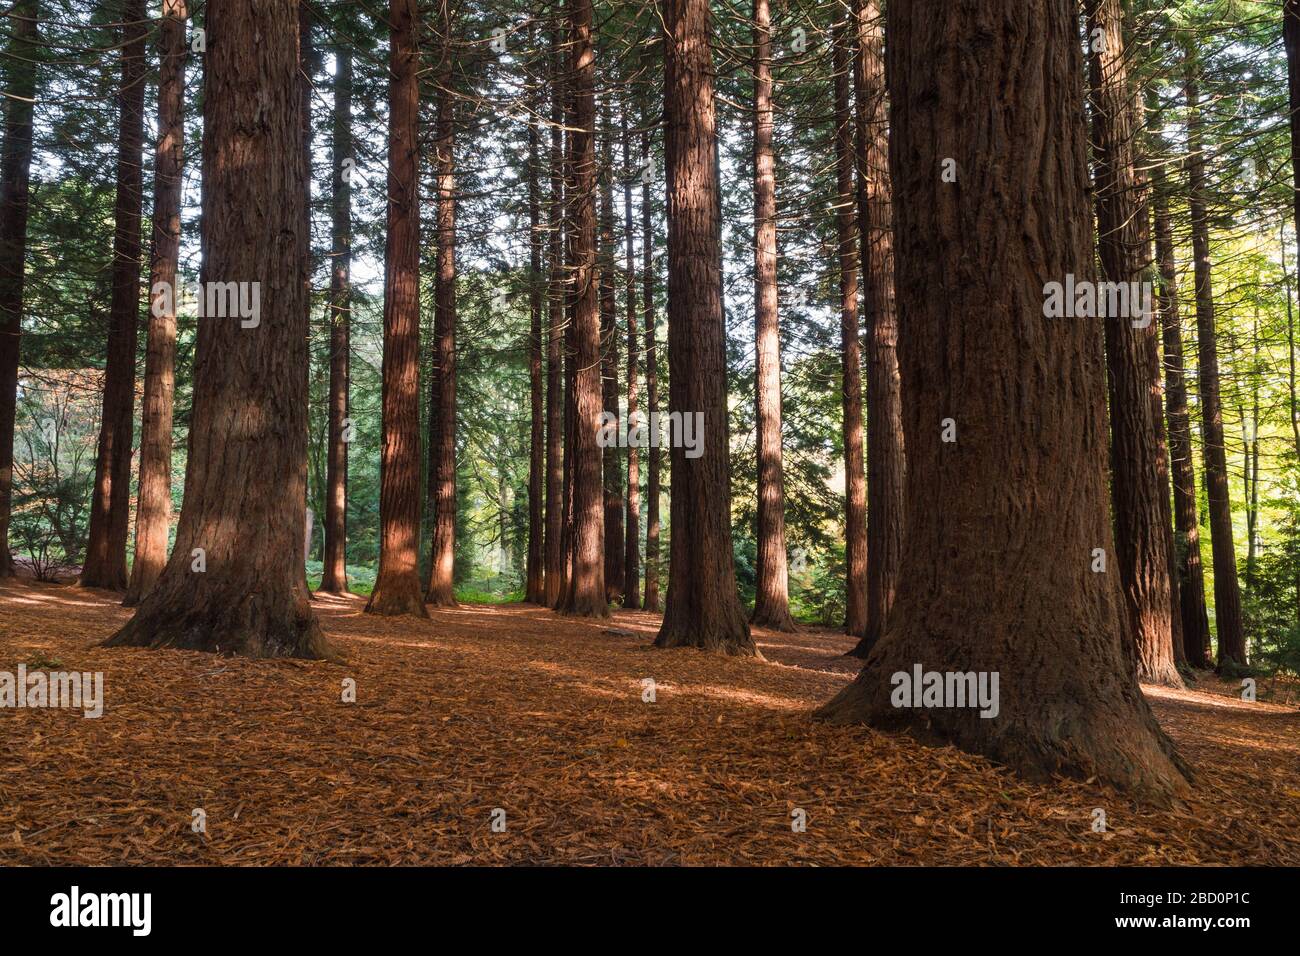 California Redwood trees (Sequoia sempervirens) Dinmore Herefordshire UK. October 2019 Stock Photo